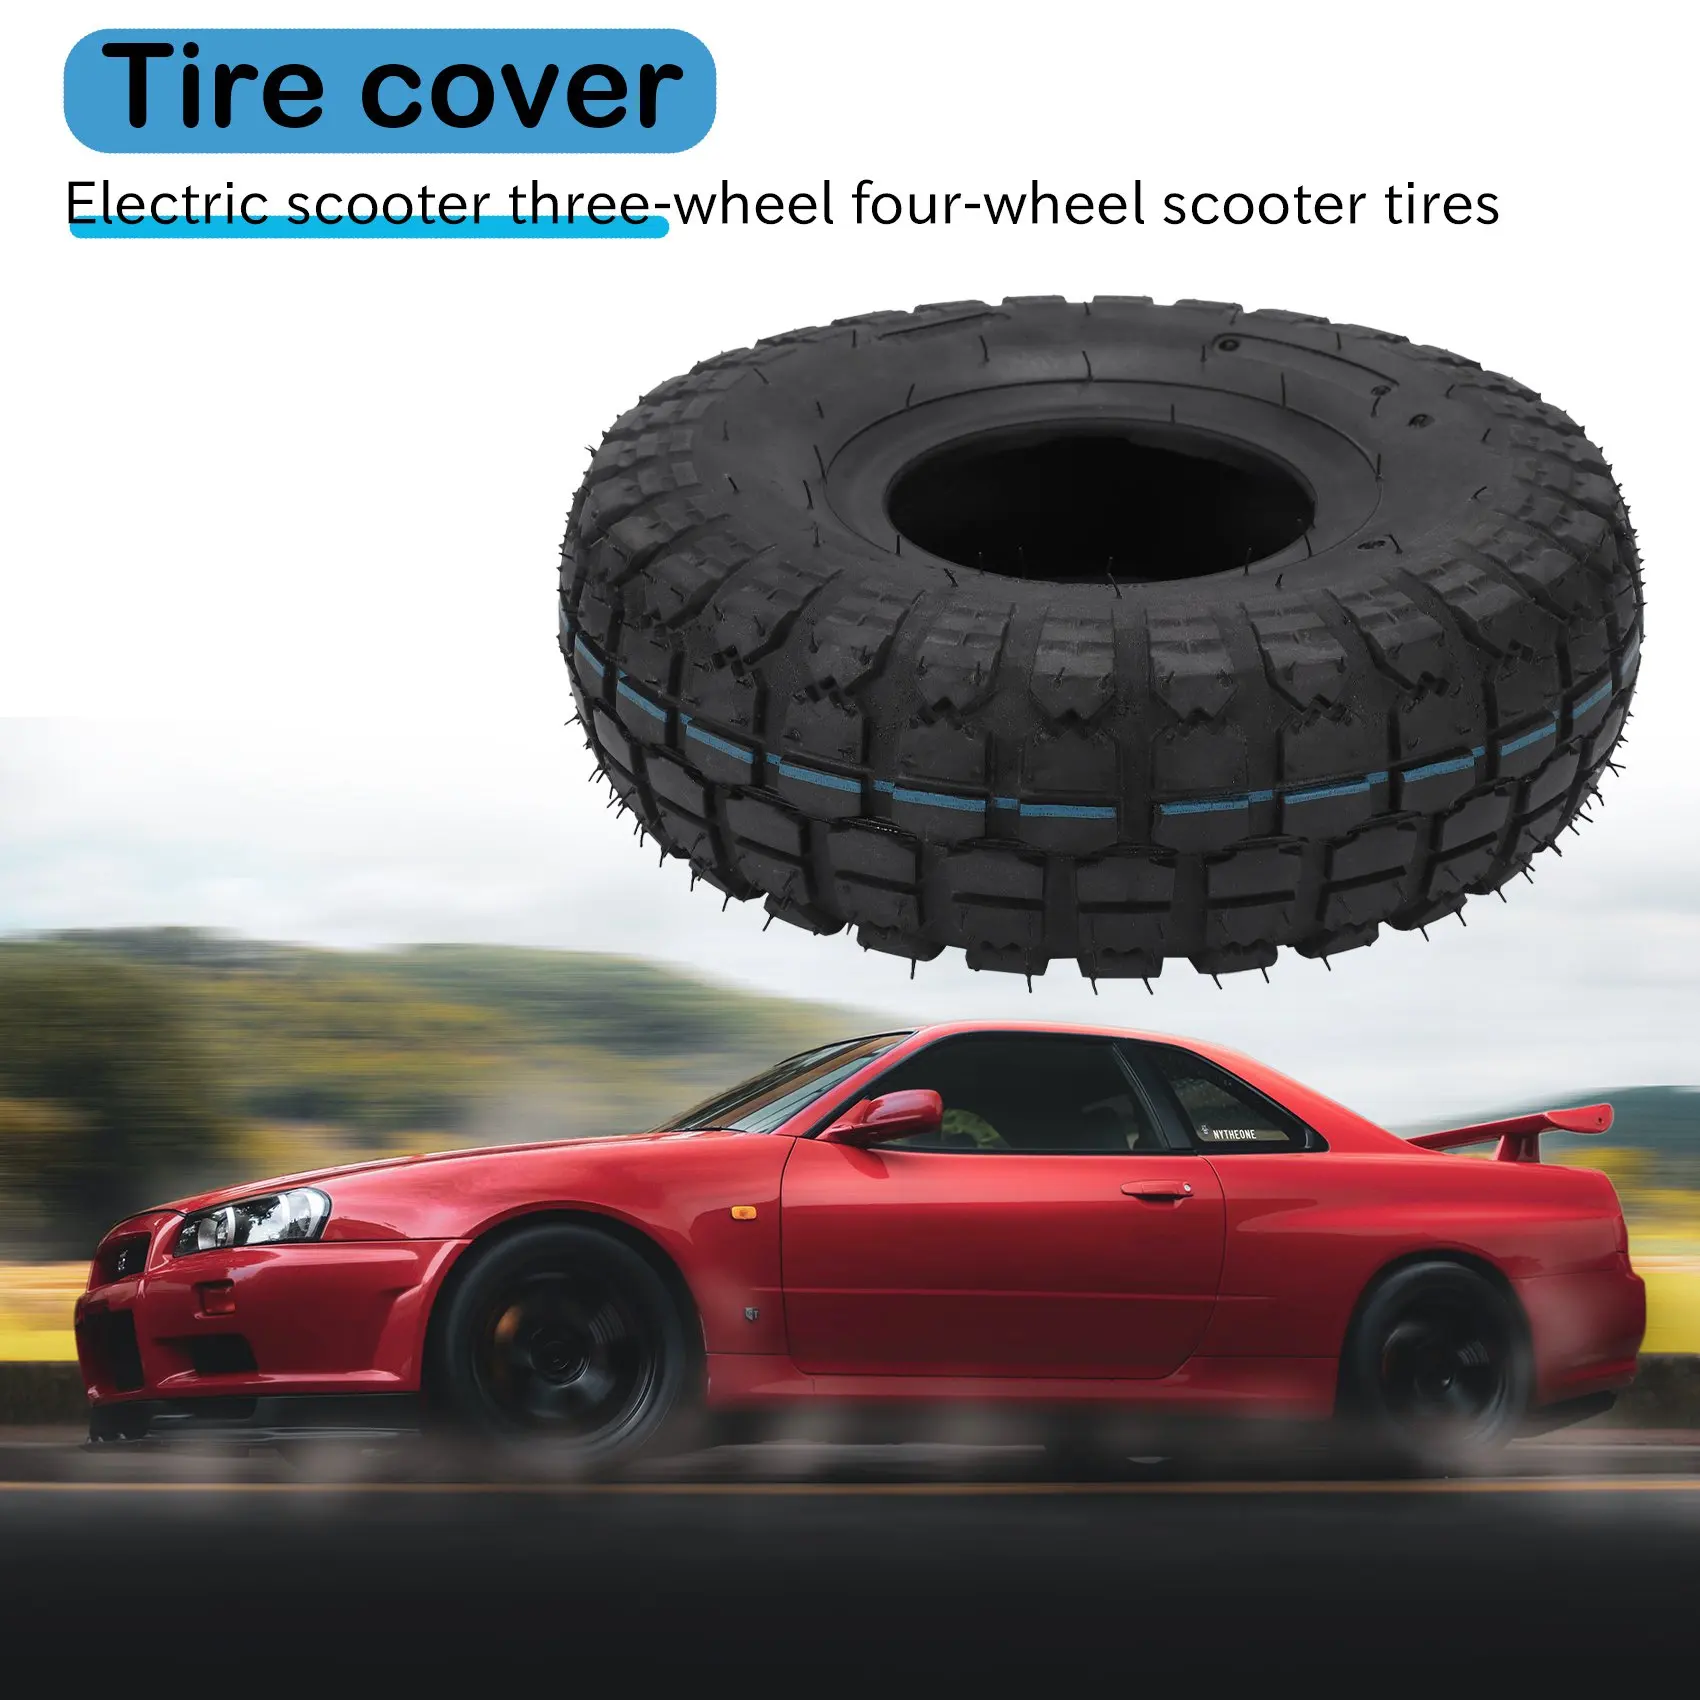 

4.10/3.50-4 410/350-4 ATV Quad Go Kart 47Cc 49Cc Chunky 4.10-4 Tire Inner Tube Fit All Models 3.50-4 4 inch Tire-Outer Tyre